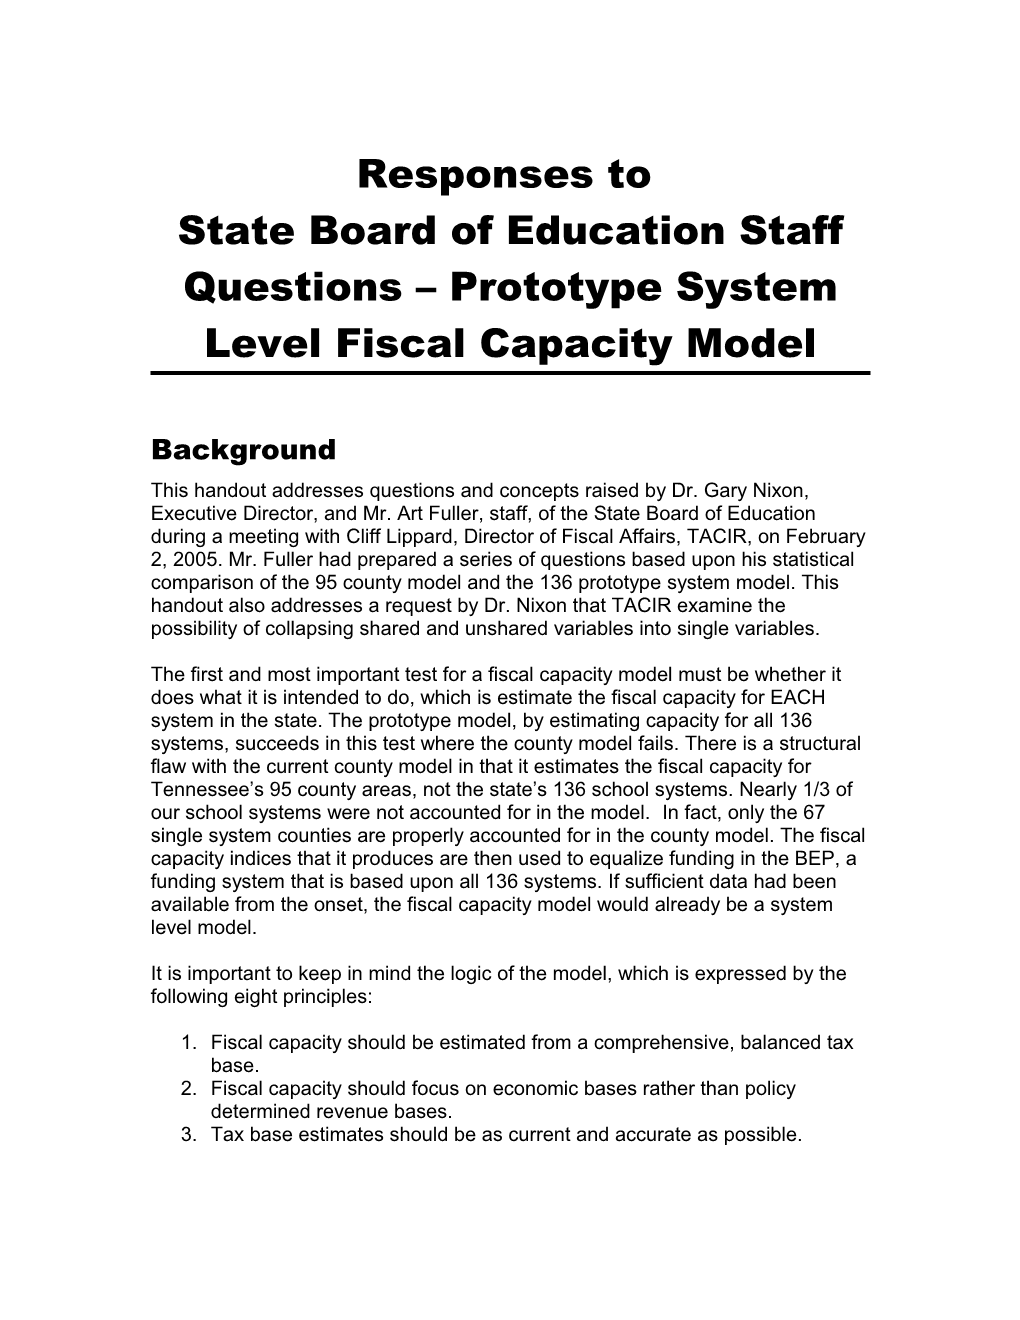 Prototype System Level Fiscal Capacity Model